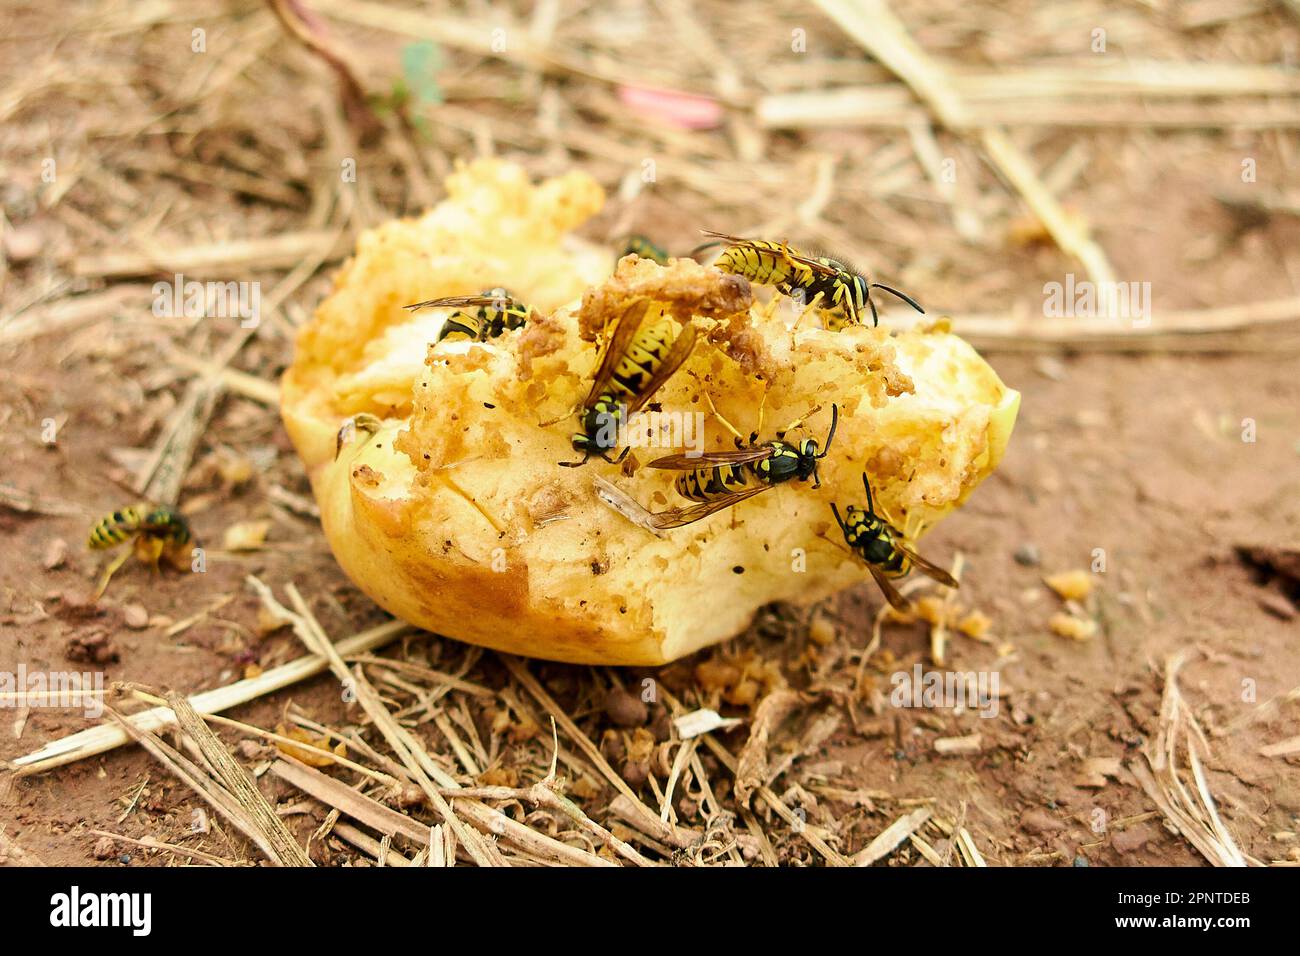 Wasps Feeding on a Rotten Yellow Apple Stock Photo